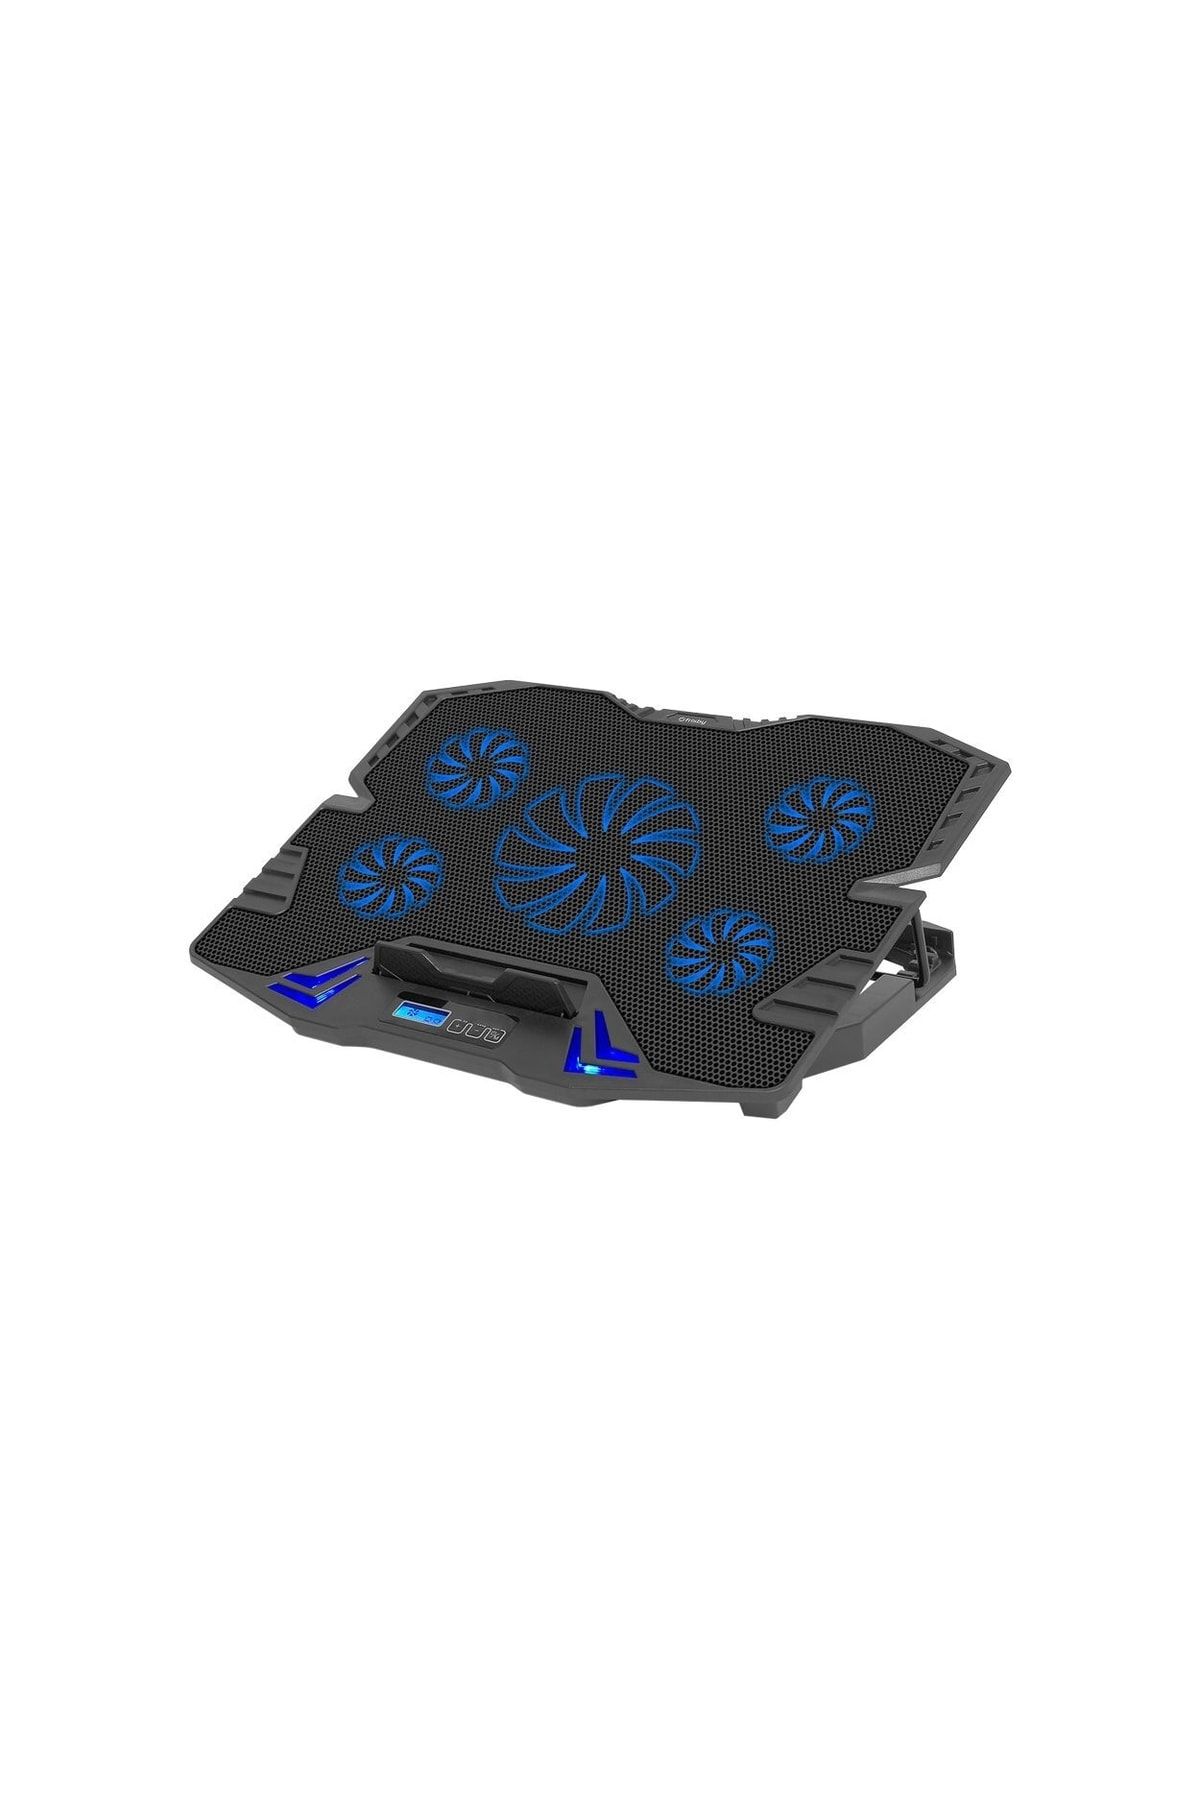 OEM Frisby Notebook Soğutucu 5 X Fan Lcd Kontrol Pane Metal Izgara 5 Işıklı 2 X Usb Port